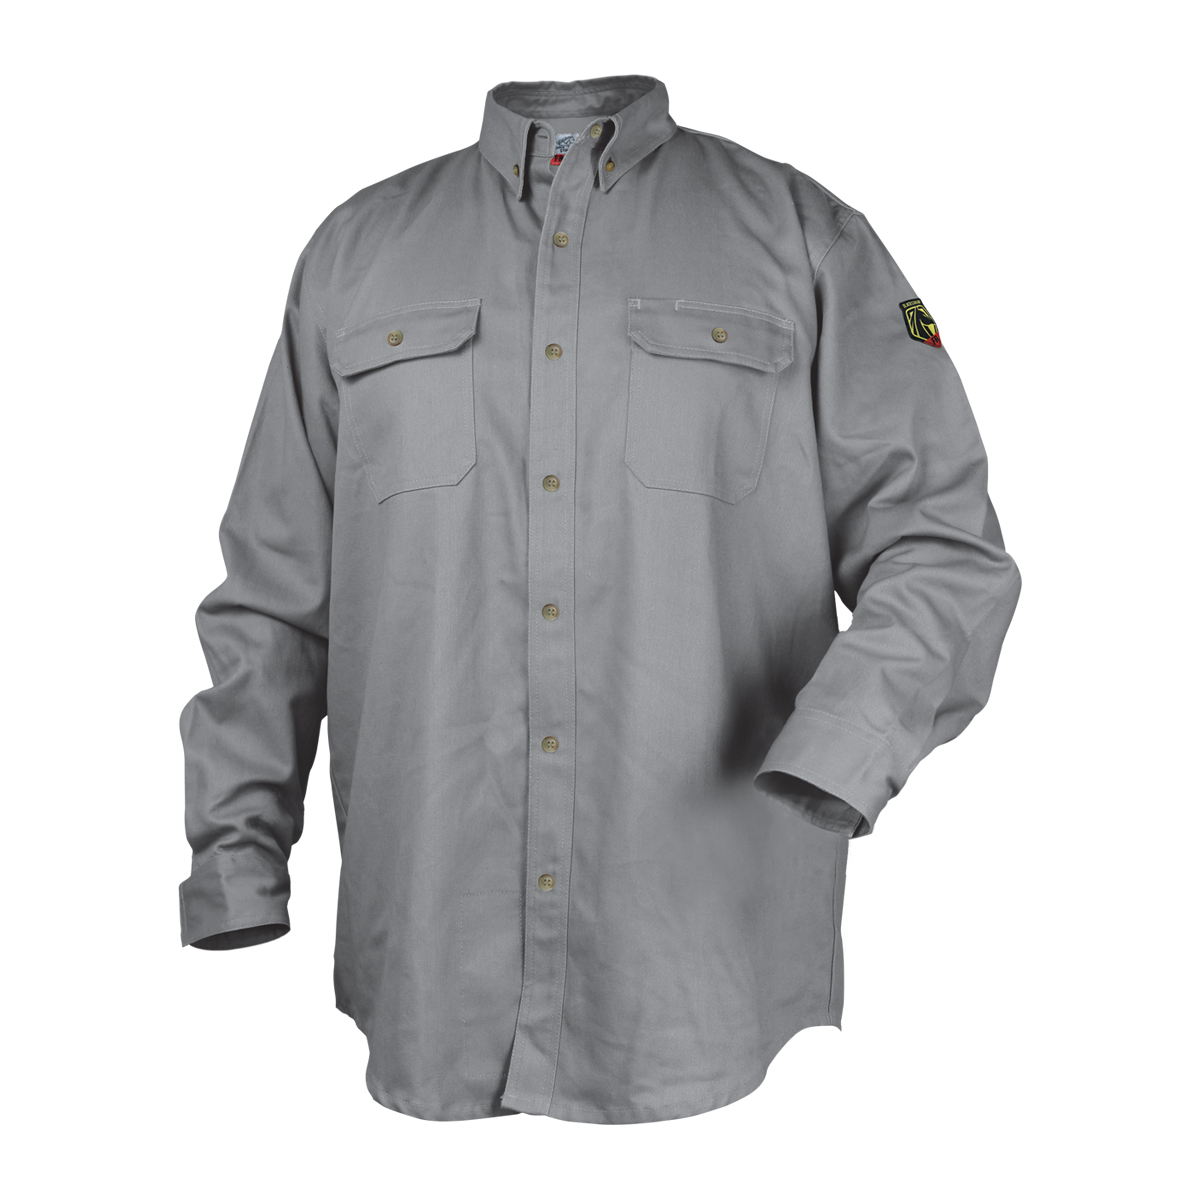 Black Stallion FR Cotton Work Shirt, Gray - Quest Safety PPE